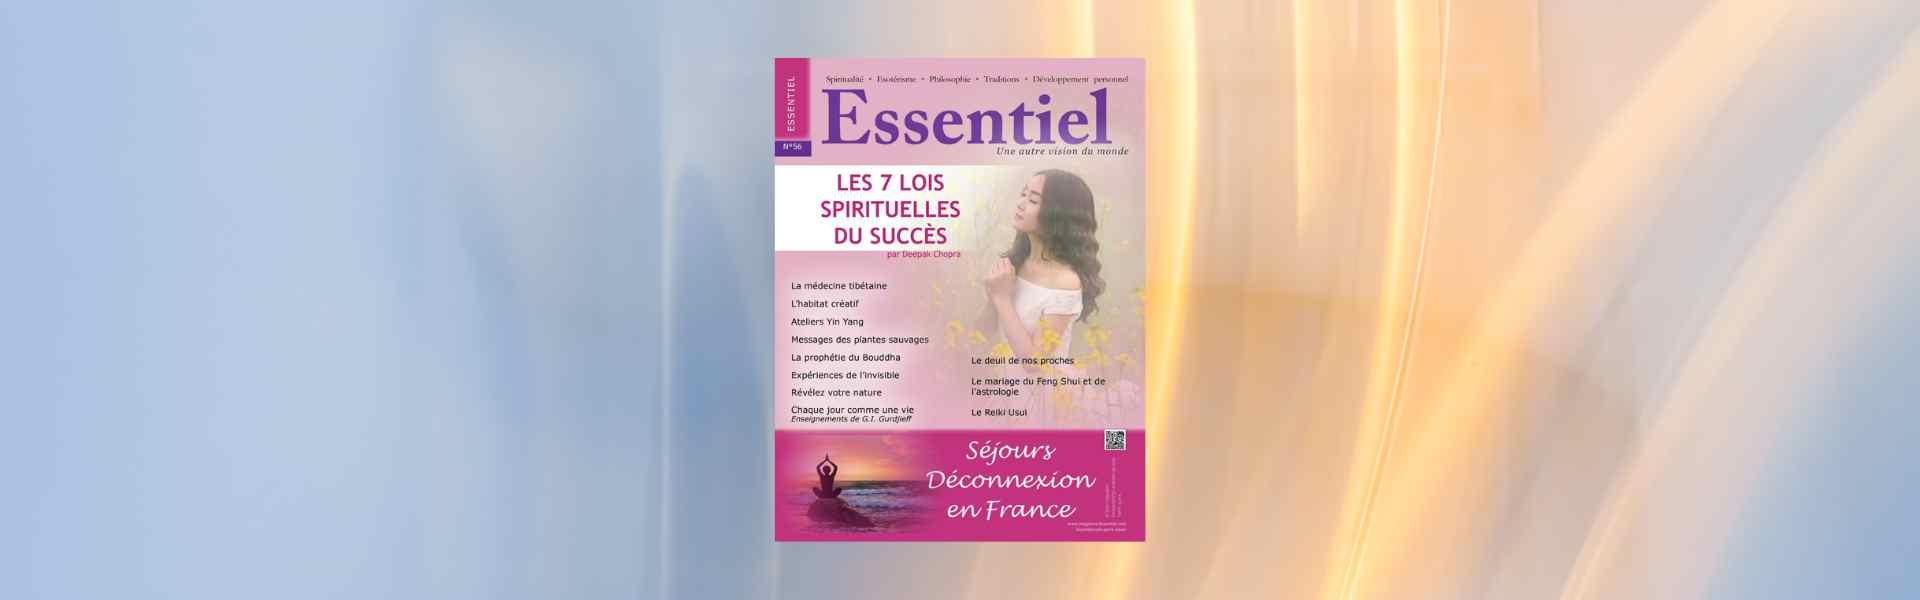 Article in French Magazine Essentiel2